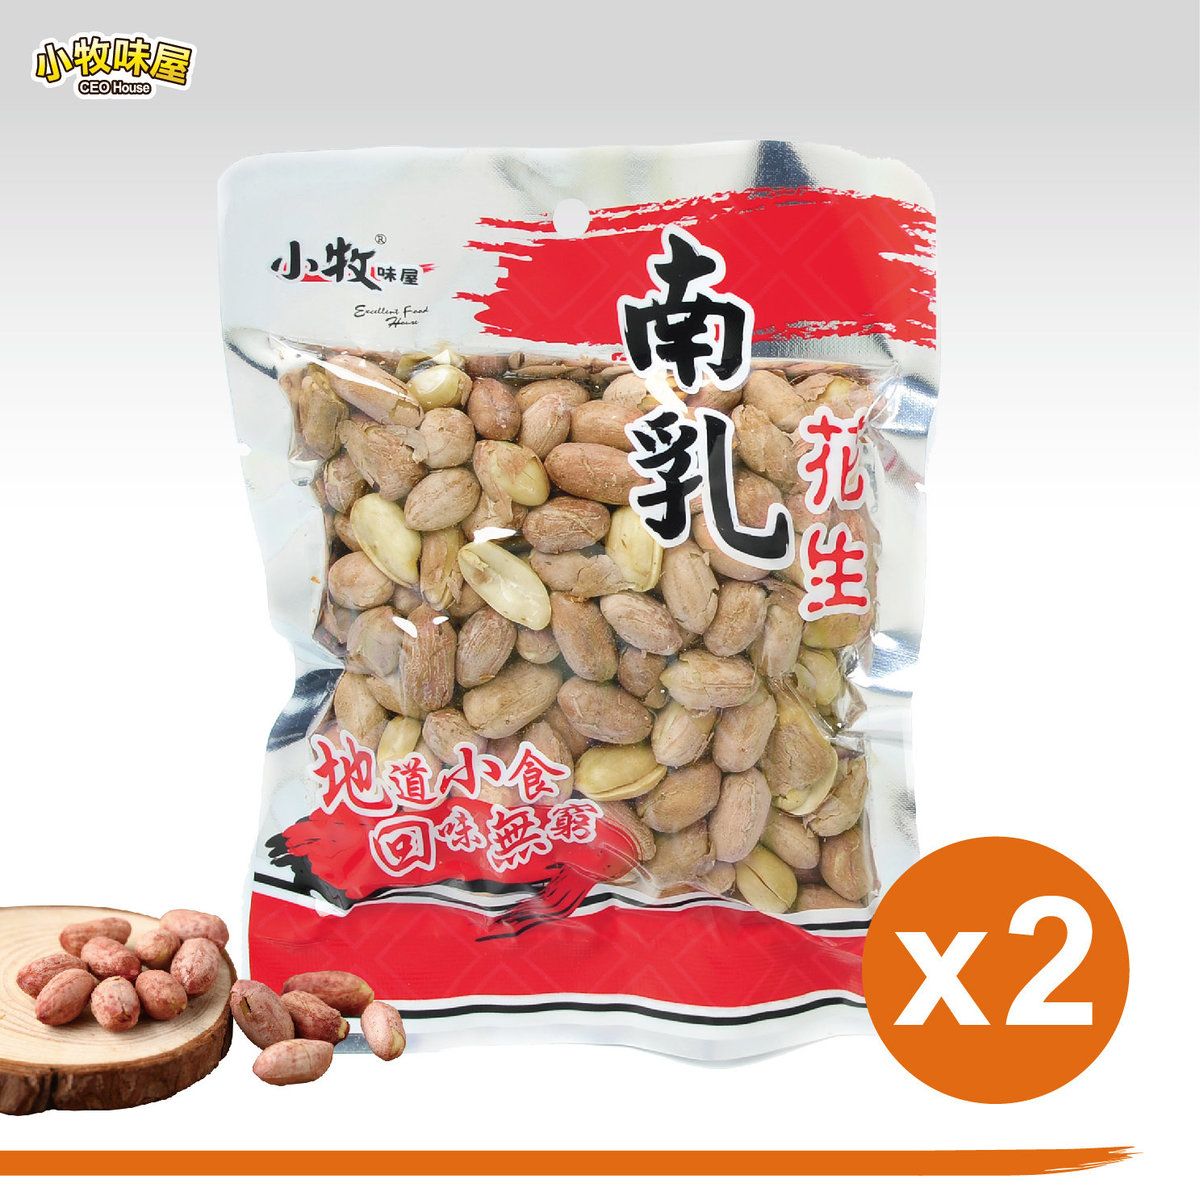 Red Bean Curd Peanuts x 2 packs